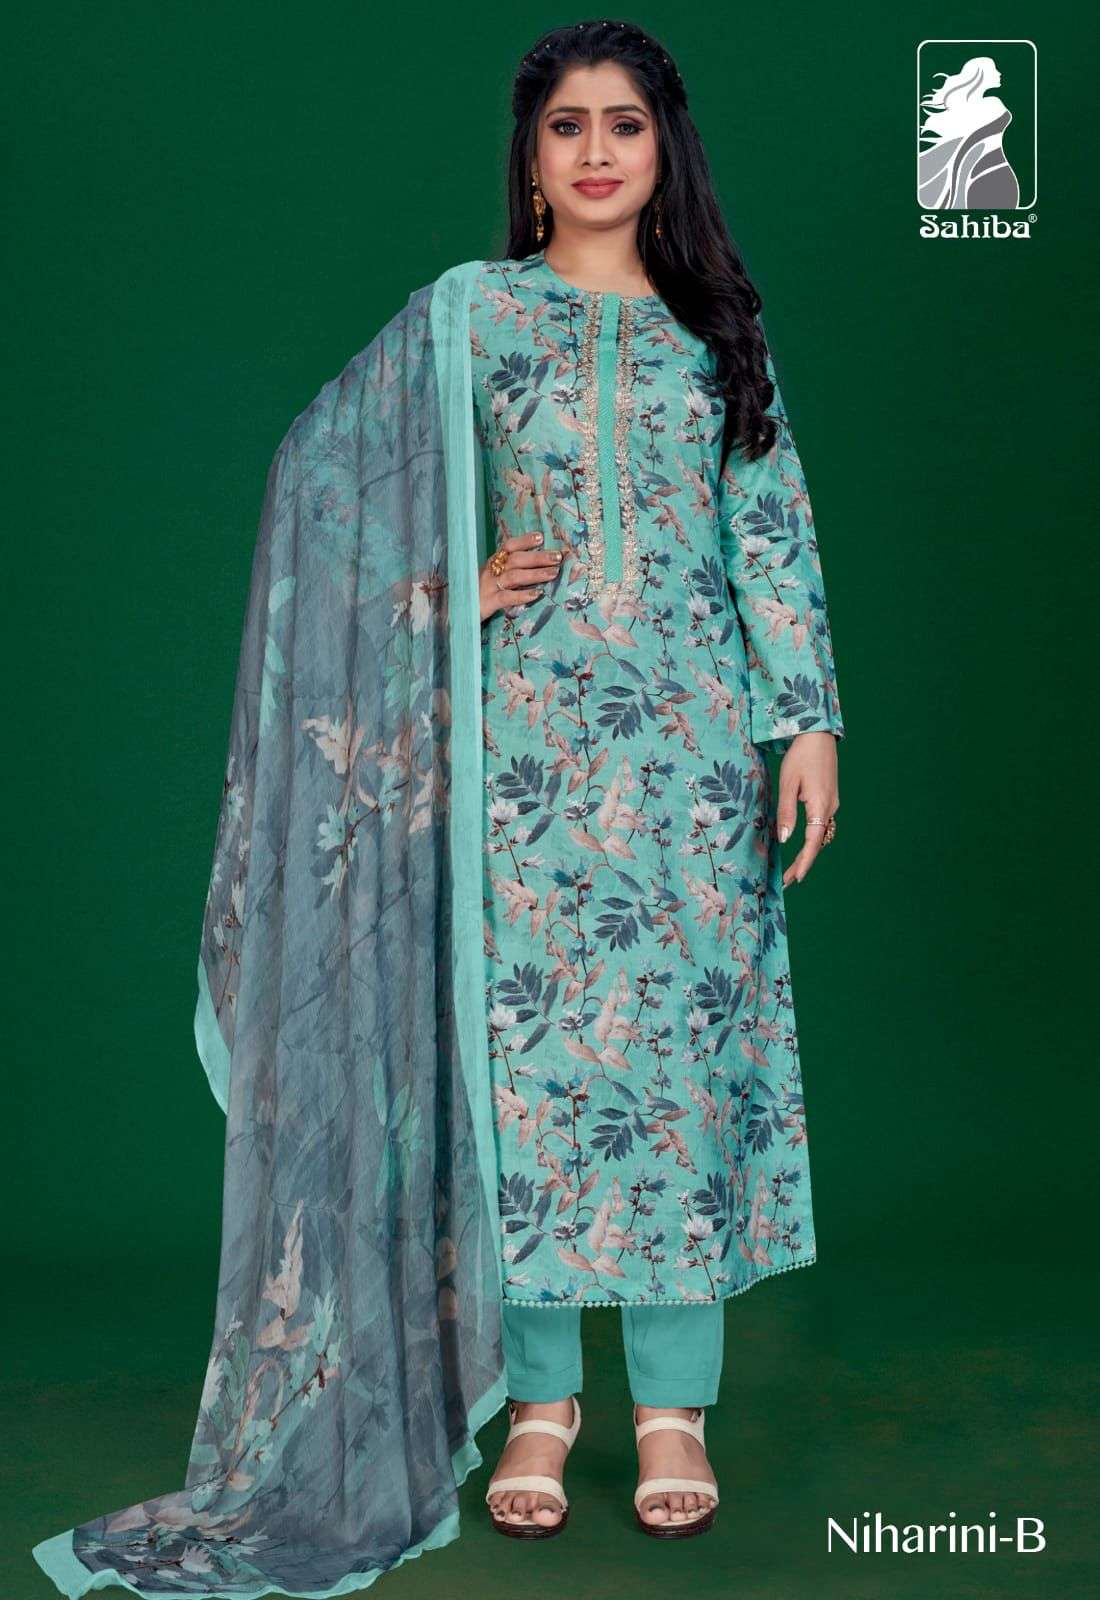 Sahiba Niharini Cambric Cotton With Handwork Suit collection